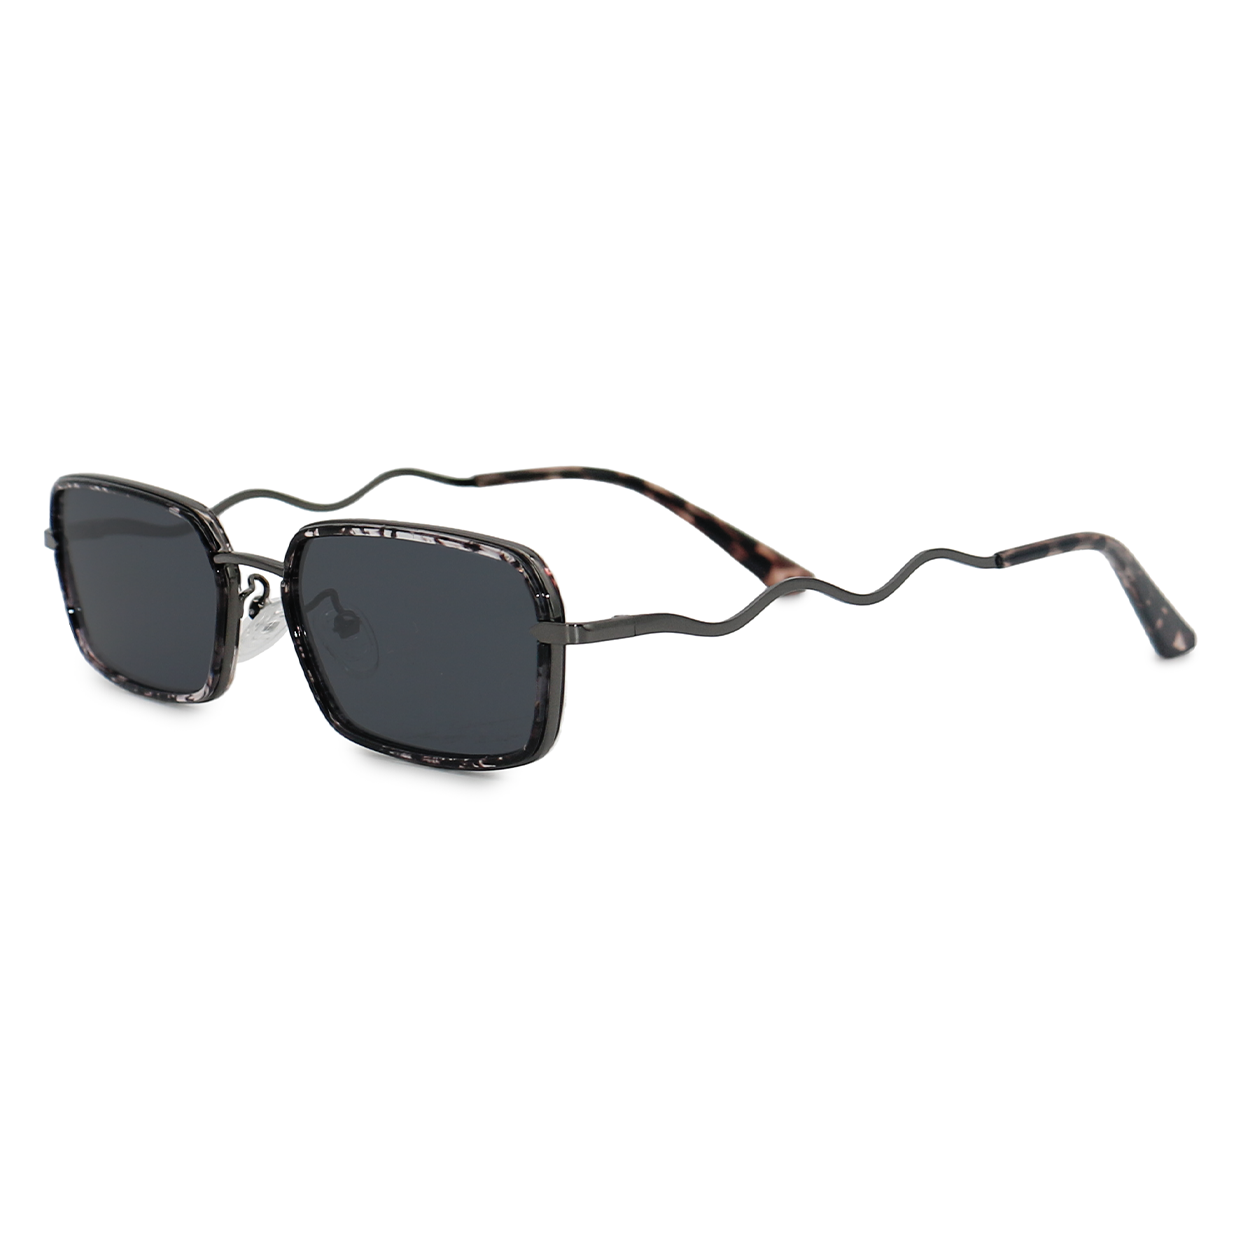 TopFoxx - EVE Black - Rectangular Sunglasses for Women - Wavy Arms